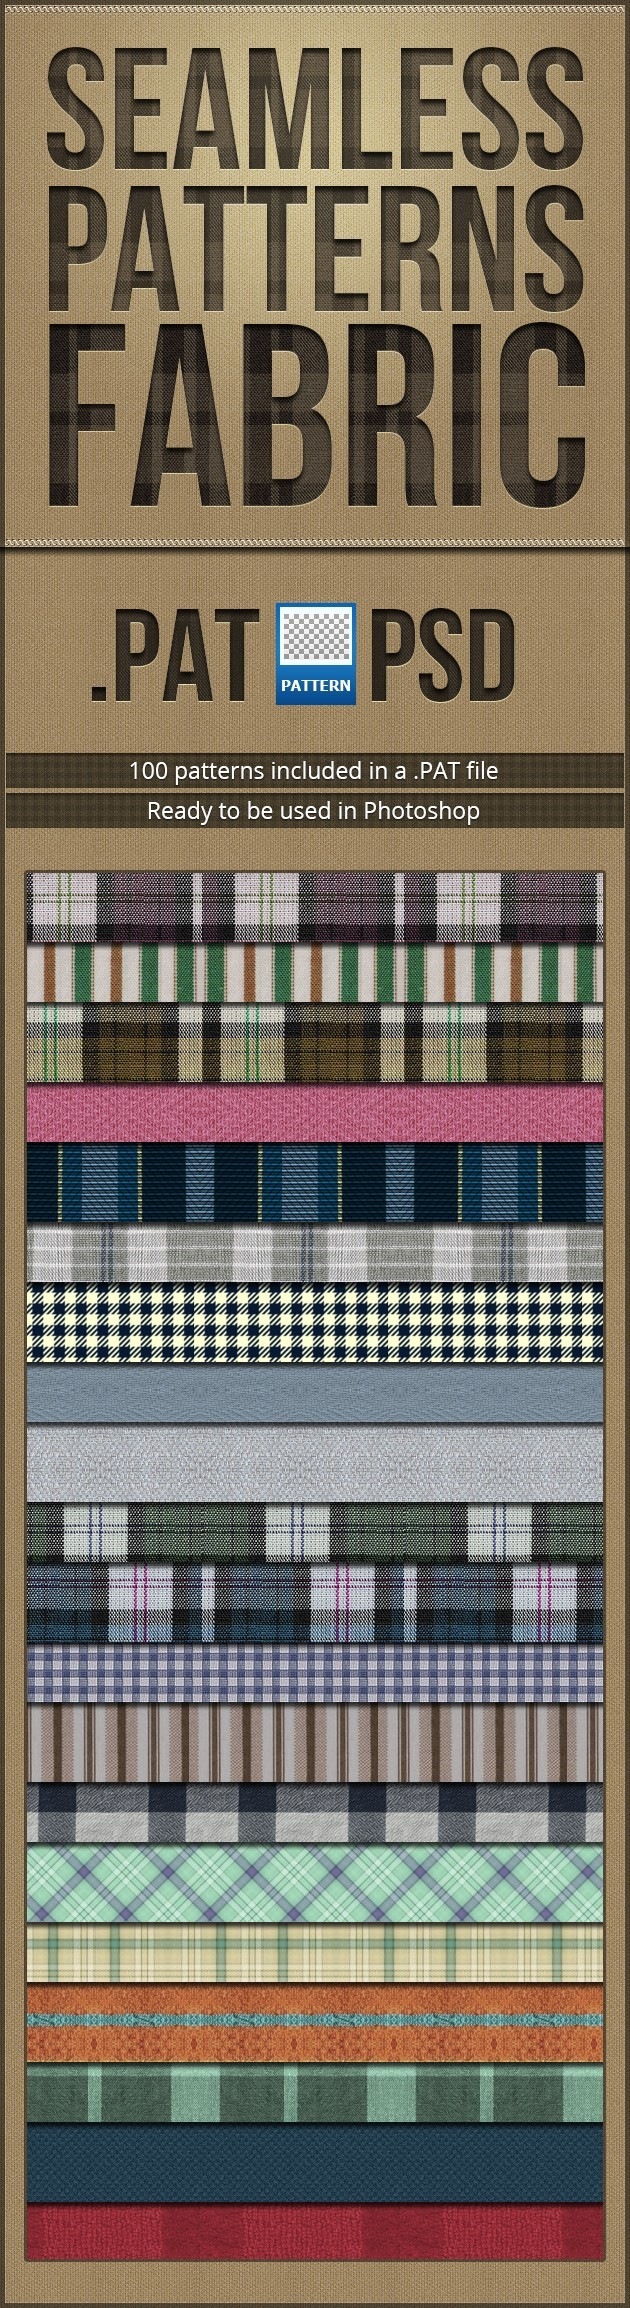 Descarga Seamless Patterns Fabric 